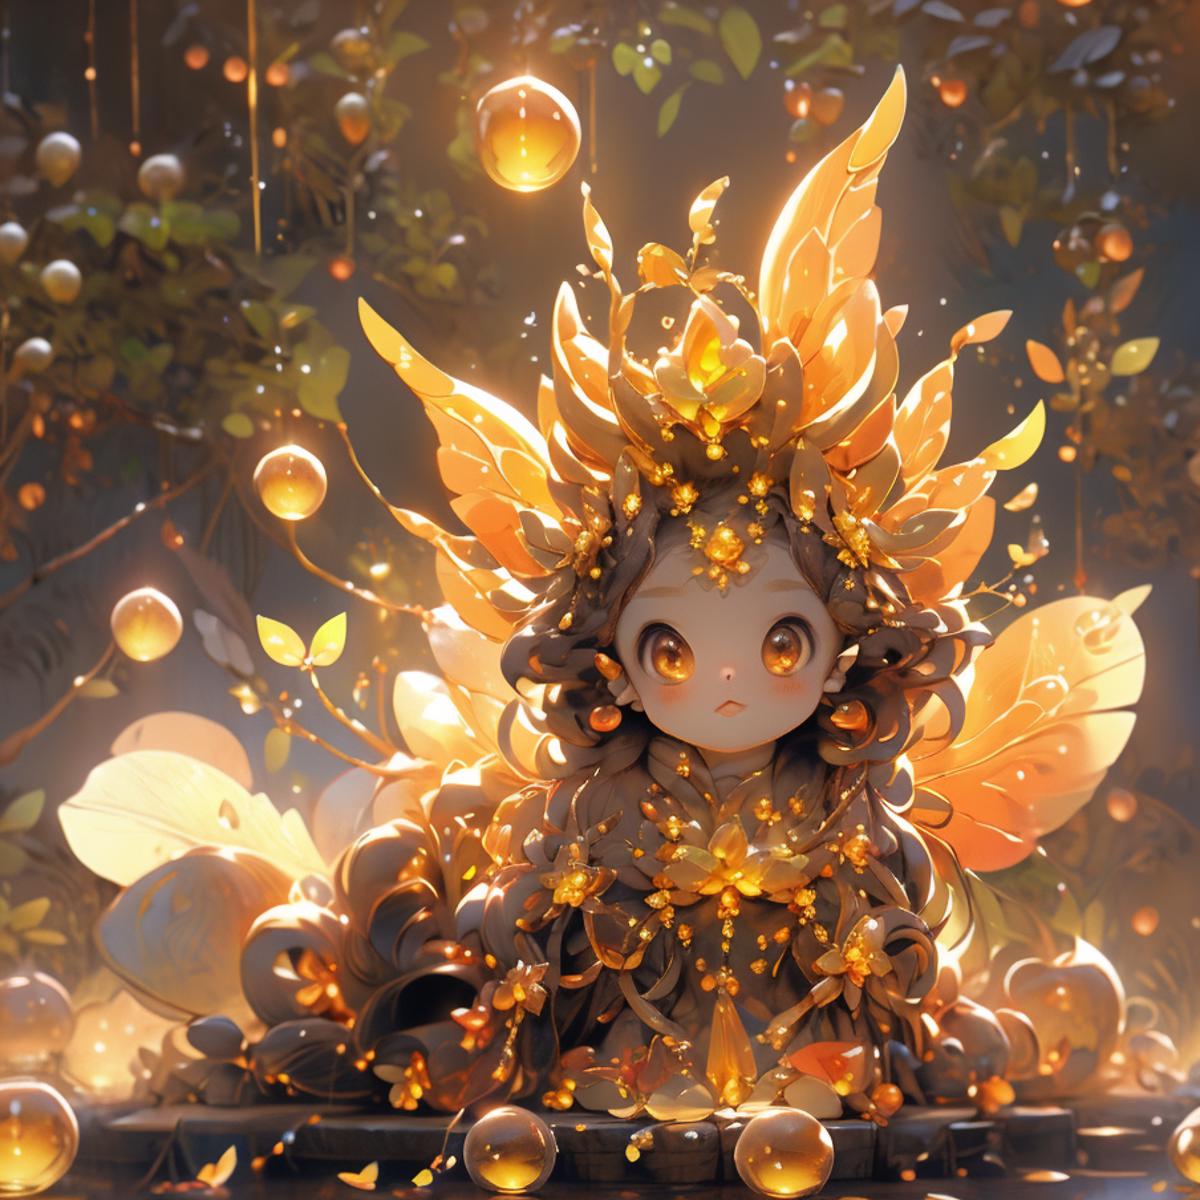 niji - fairy image by a0921577576221